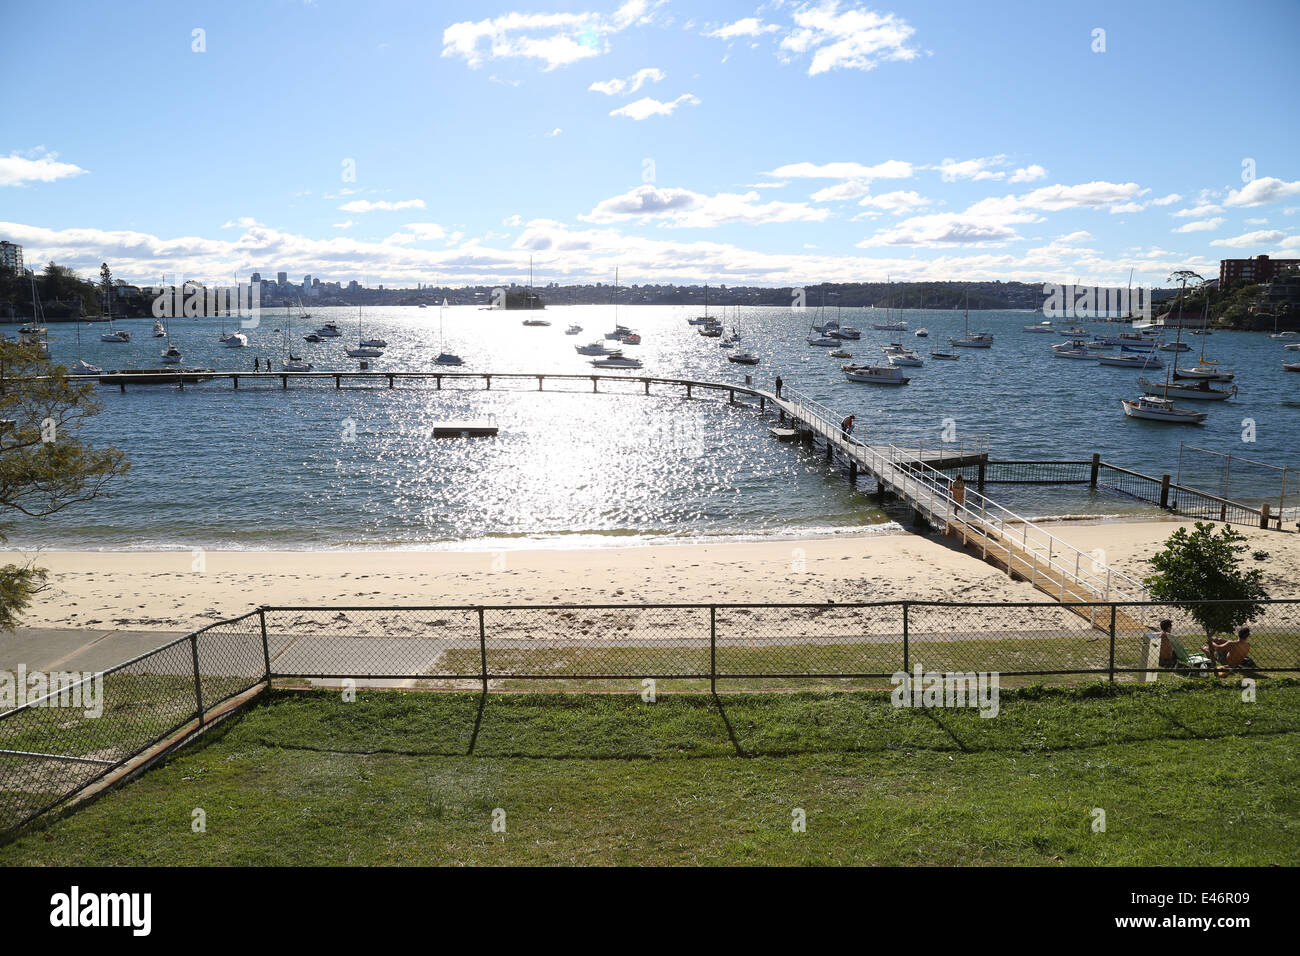 Murray Rose Piscina, siete chelines Playa, Double Bay en Sydney, Australia. Foto de stock